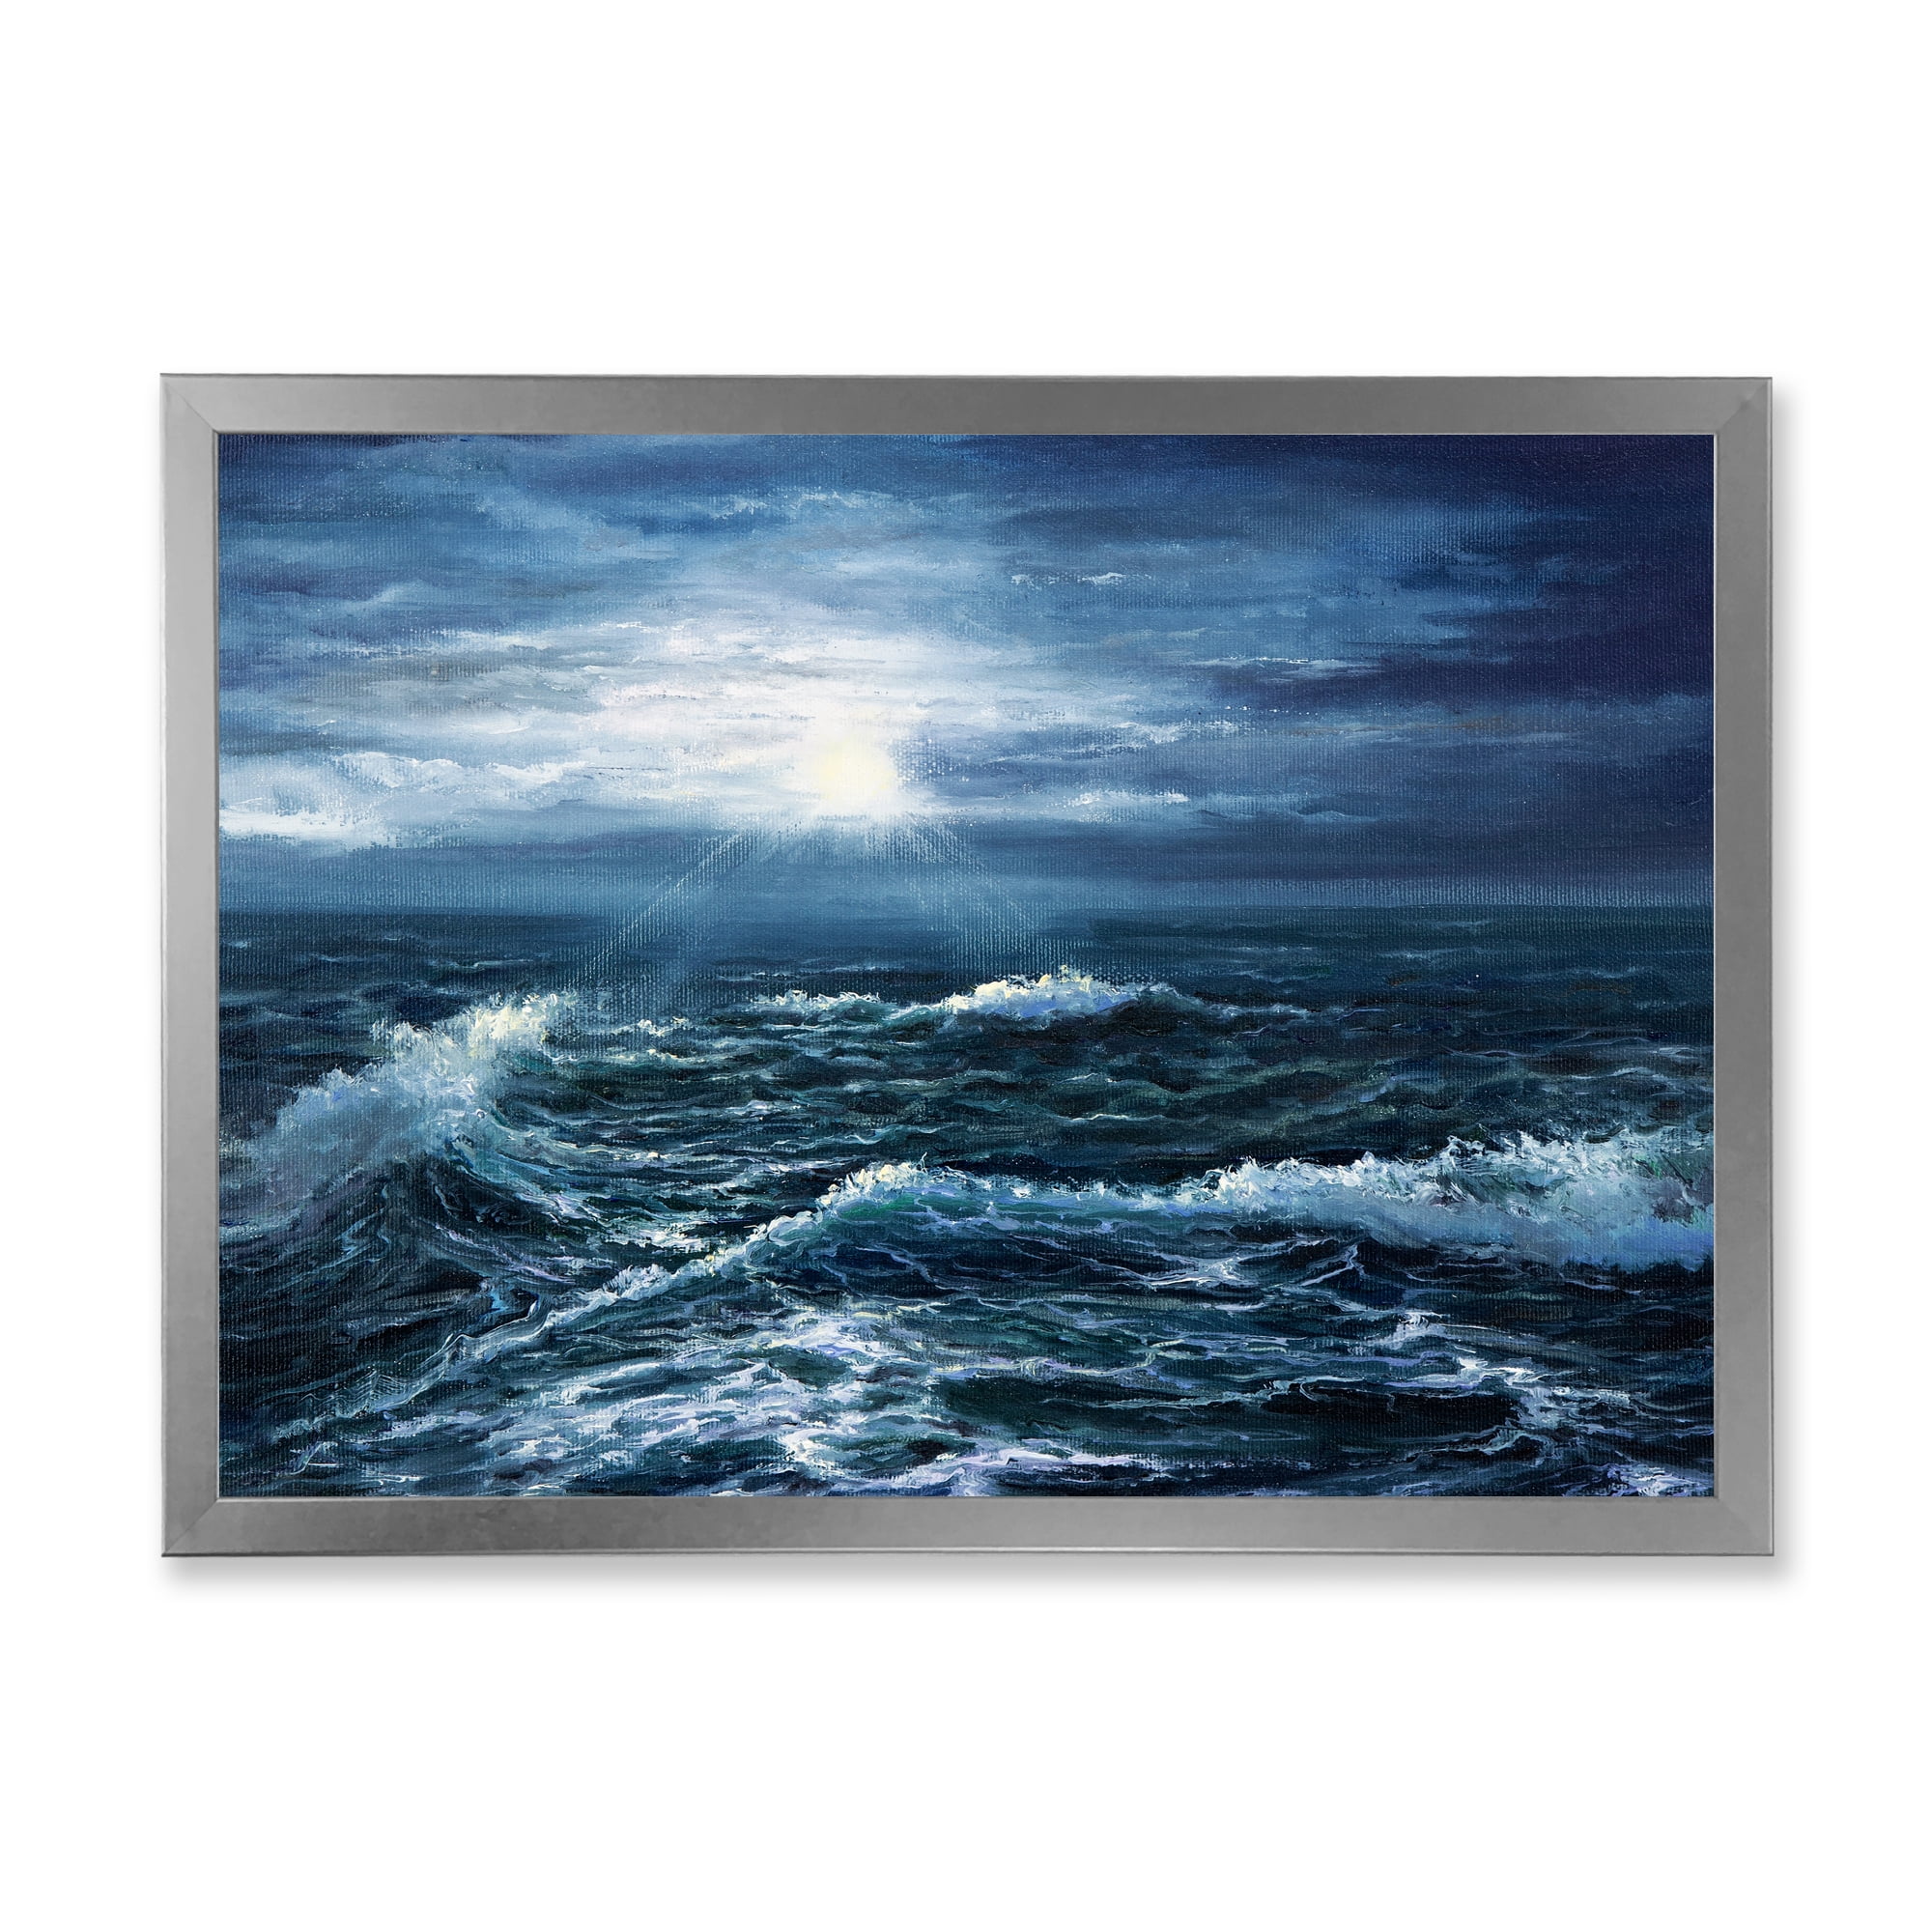 Sea Waves Poster Canvas Prints Wall Art Decor Painting 24x12''/32x16'' Frameless 